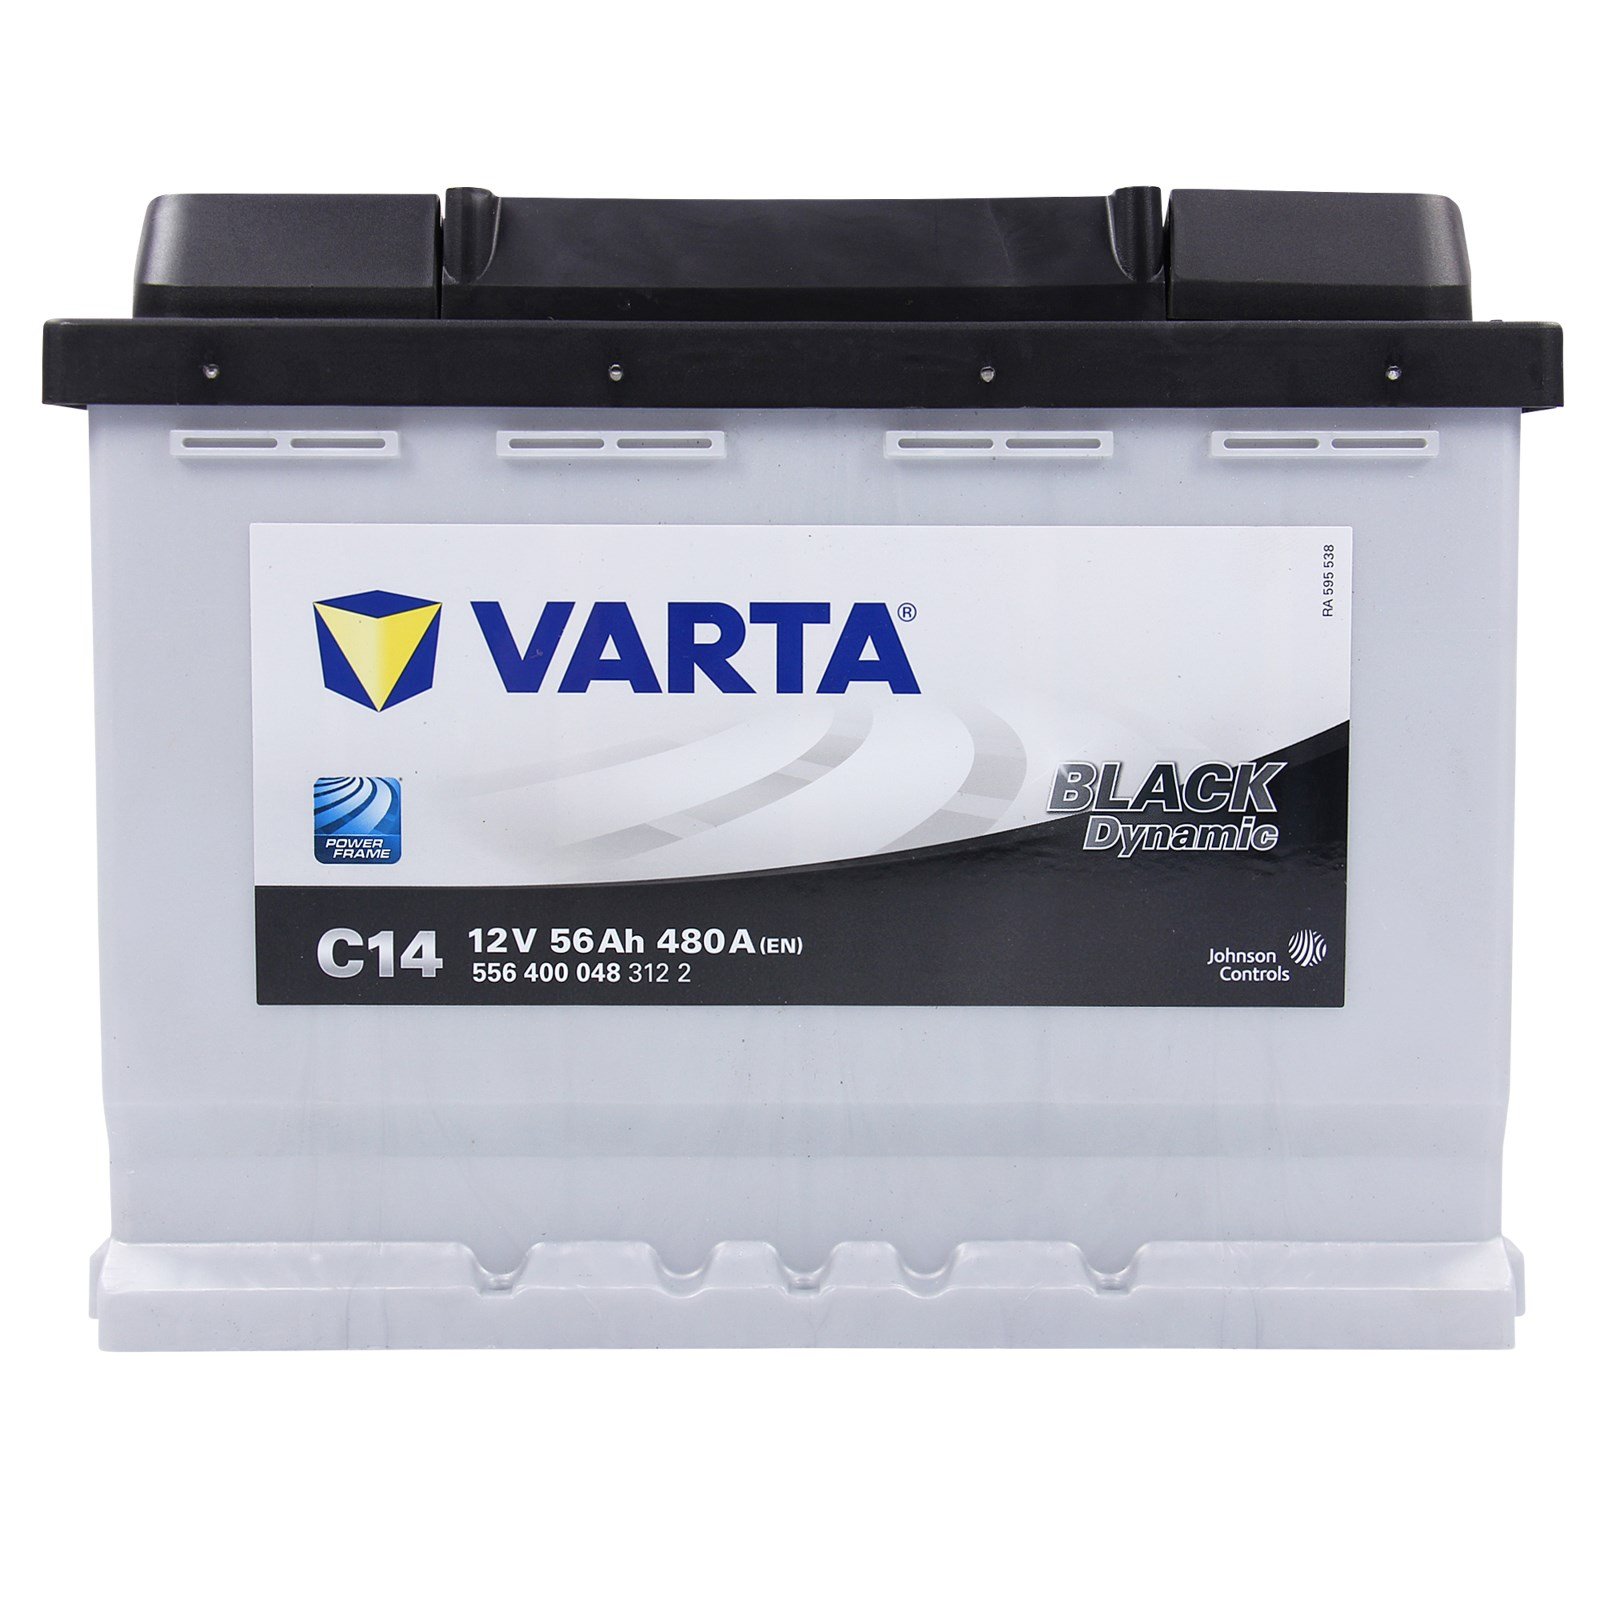 Varta 5564000483122 Black Dynamic C14 Autobatterie 12 V 56 Ah 480 A von Varta